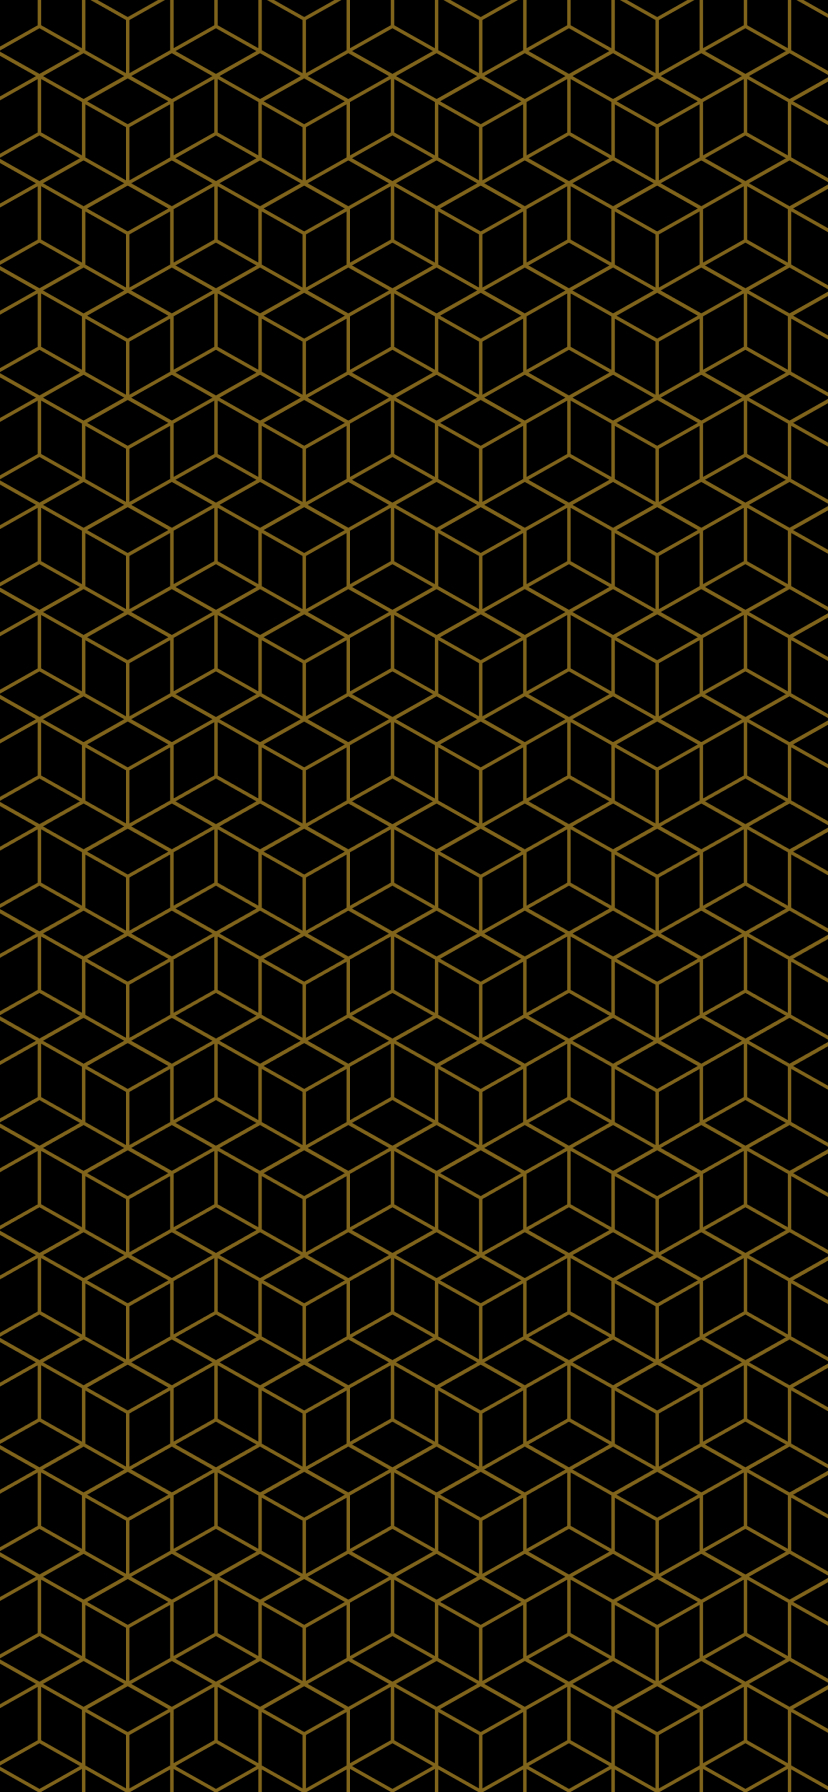 Geometric Cubes in Black & Gold